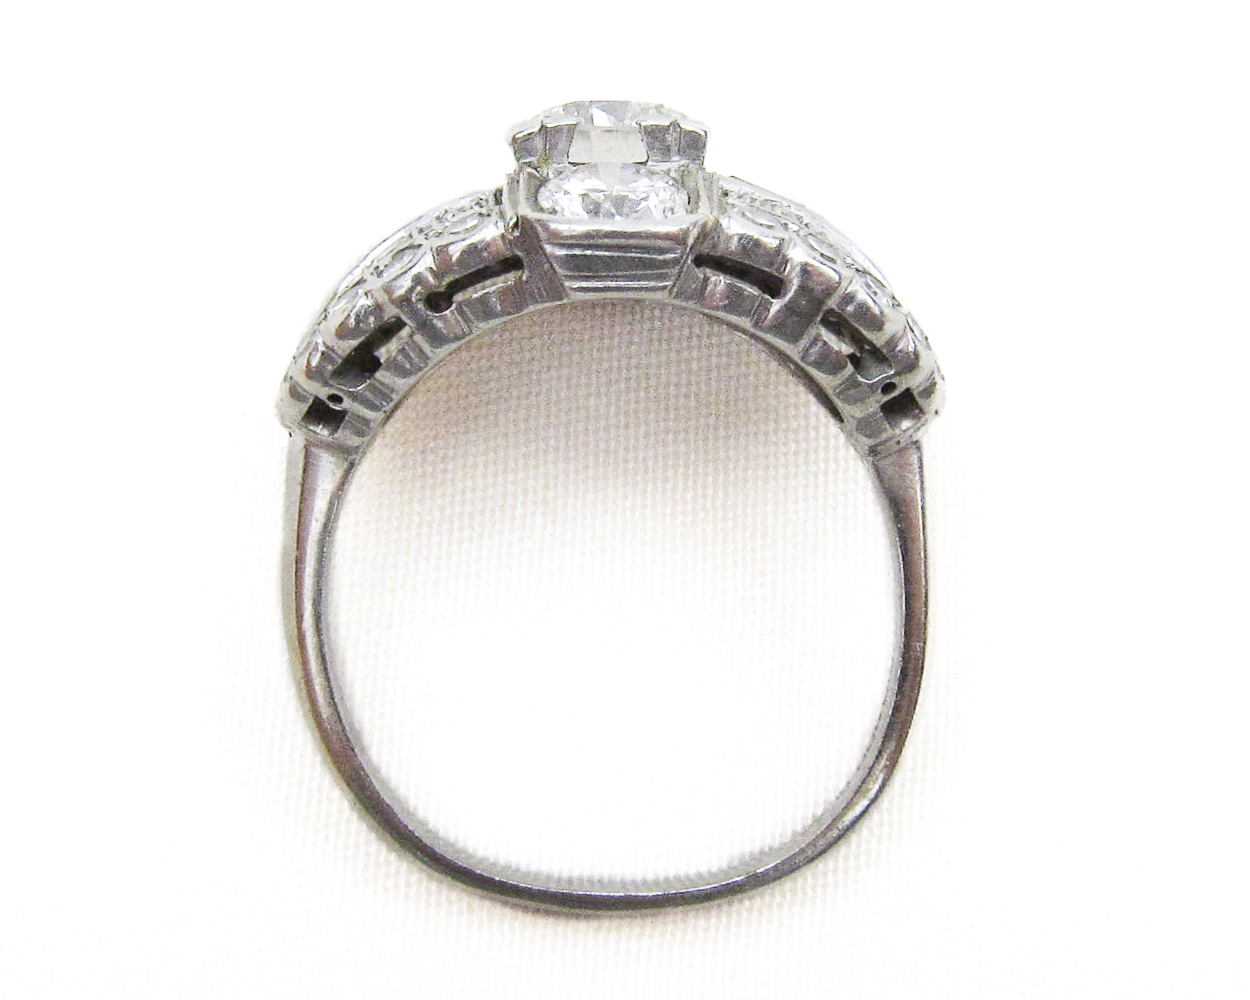 Midcentury Ornate Diamond Cluster Cocktail Ring